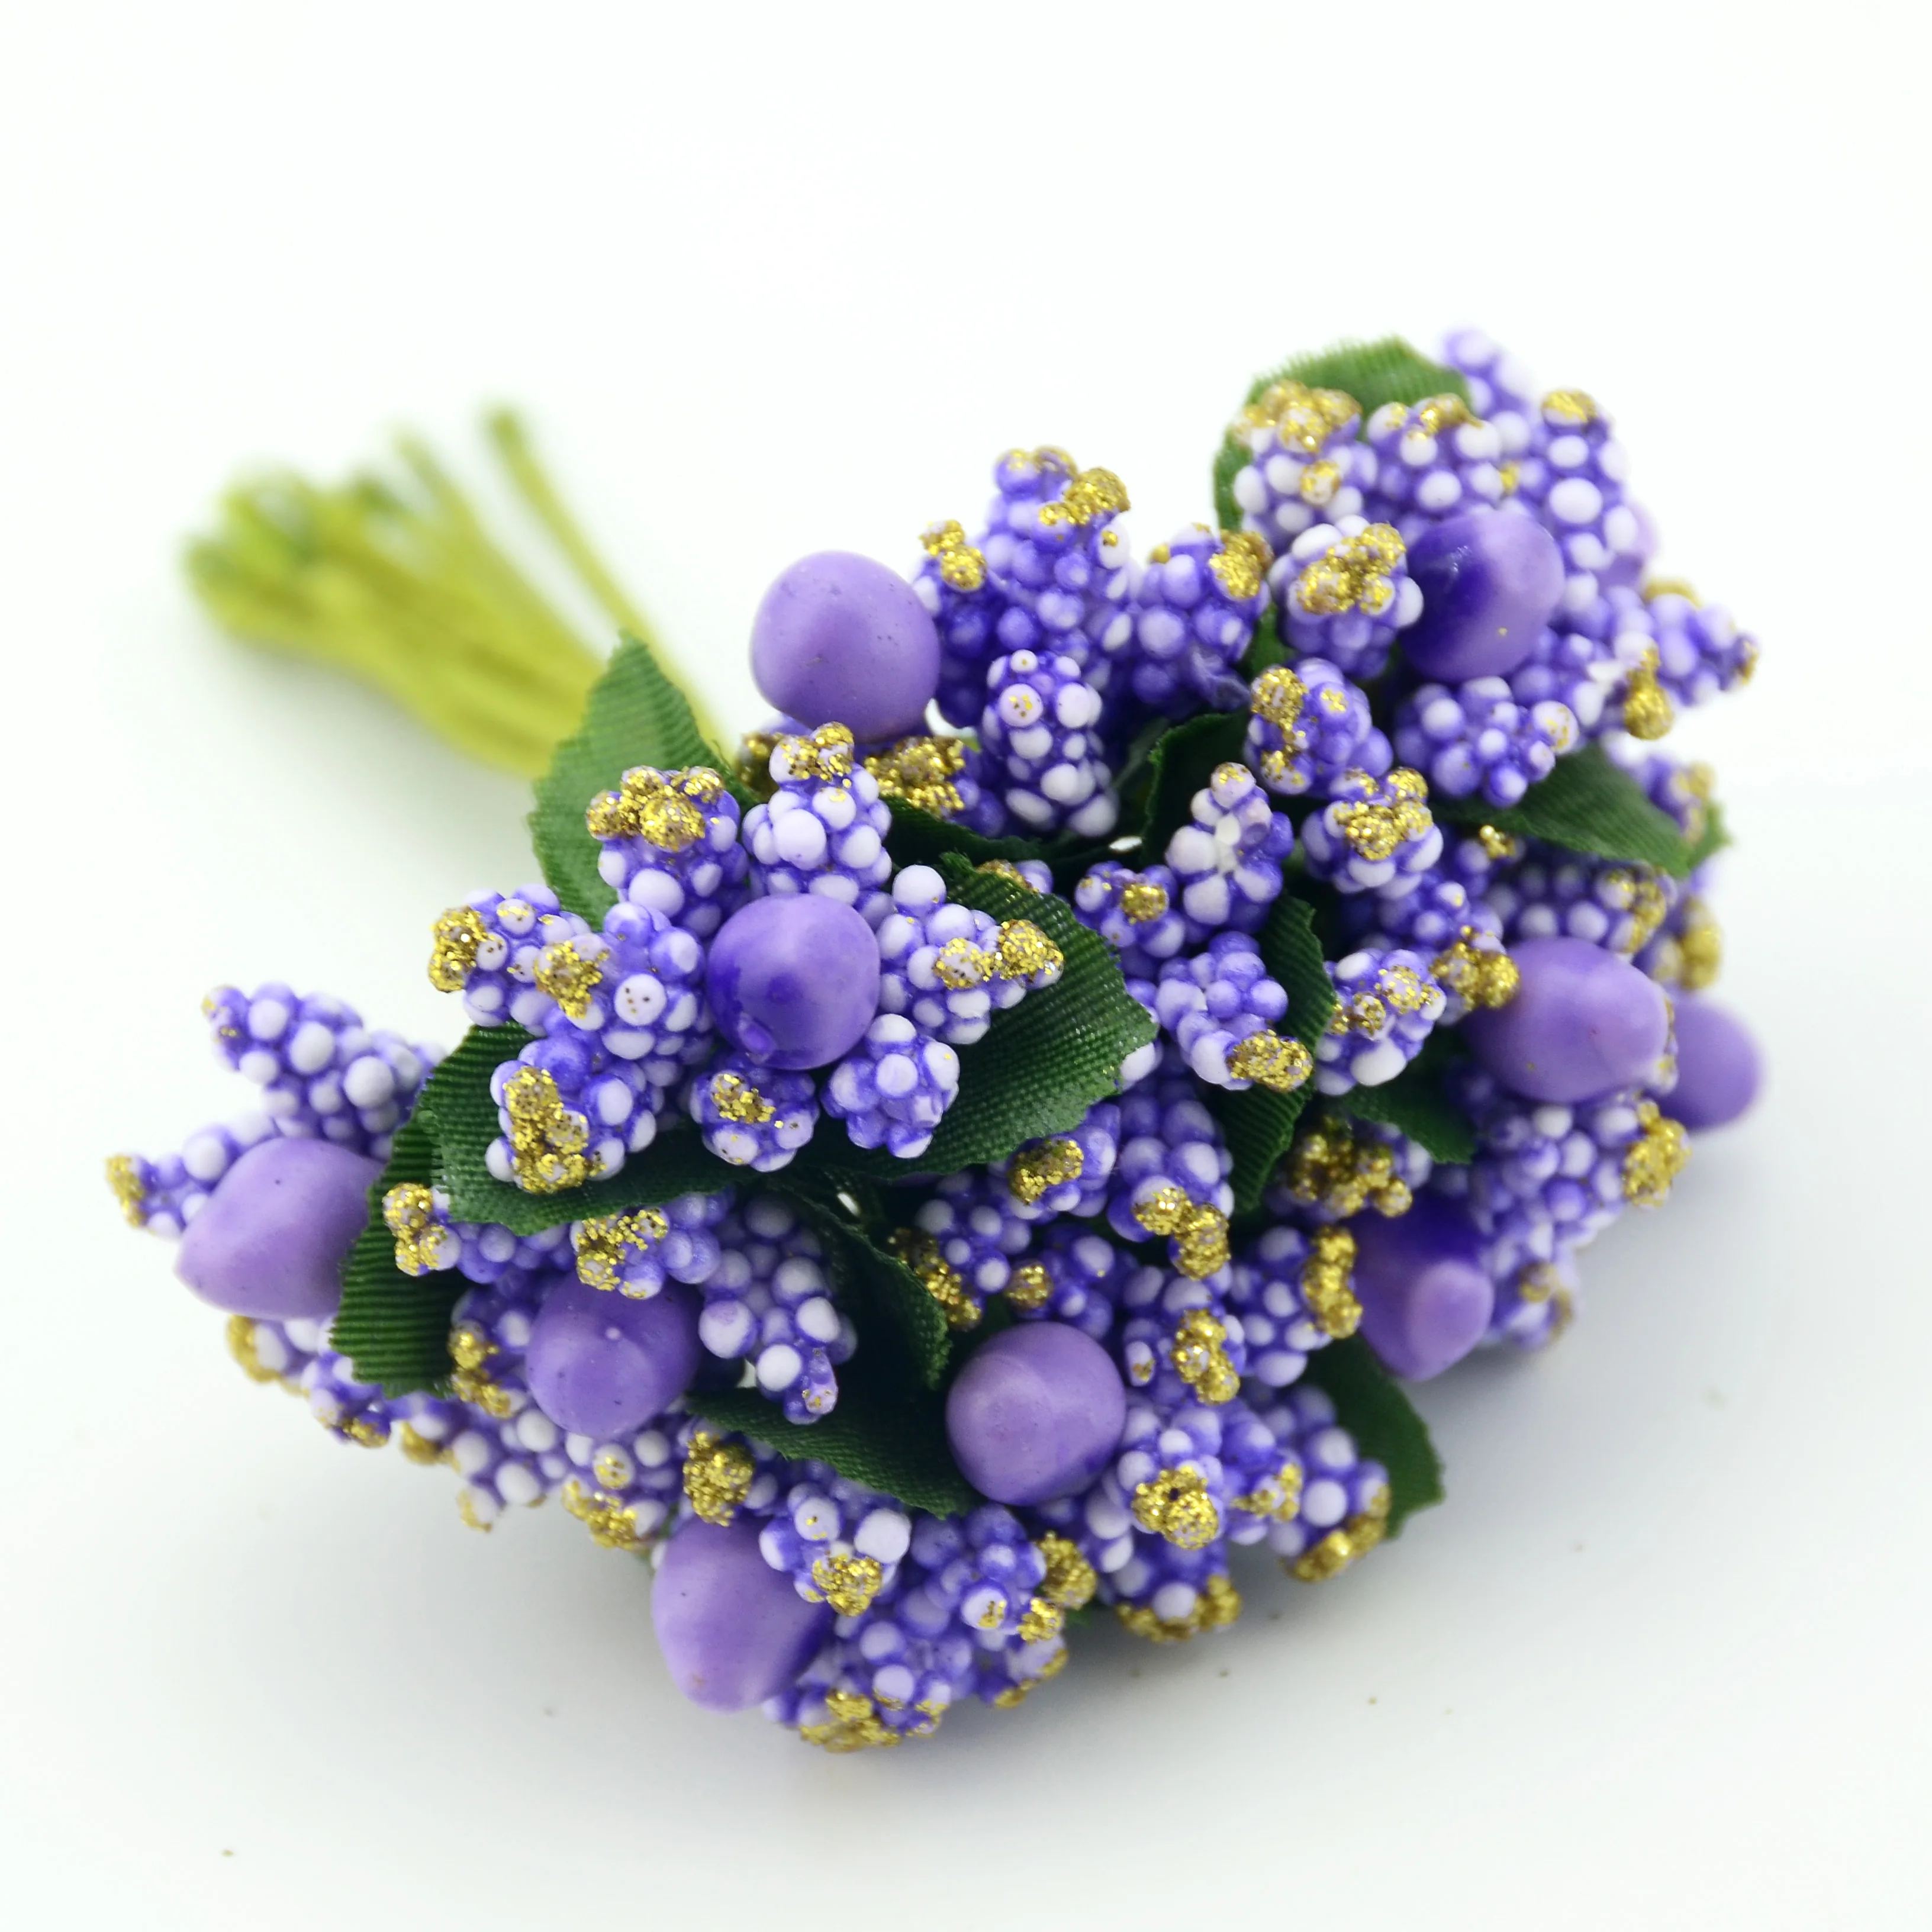 Details about   12pcs Mini Artificial Flower Stamens Handmade For Wedding Party Decoration  WQ 